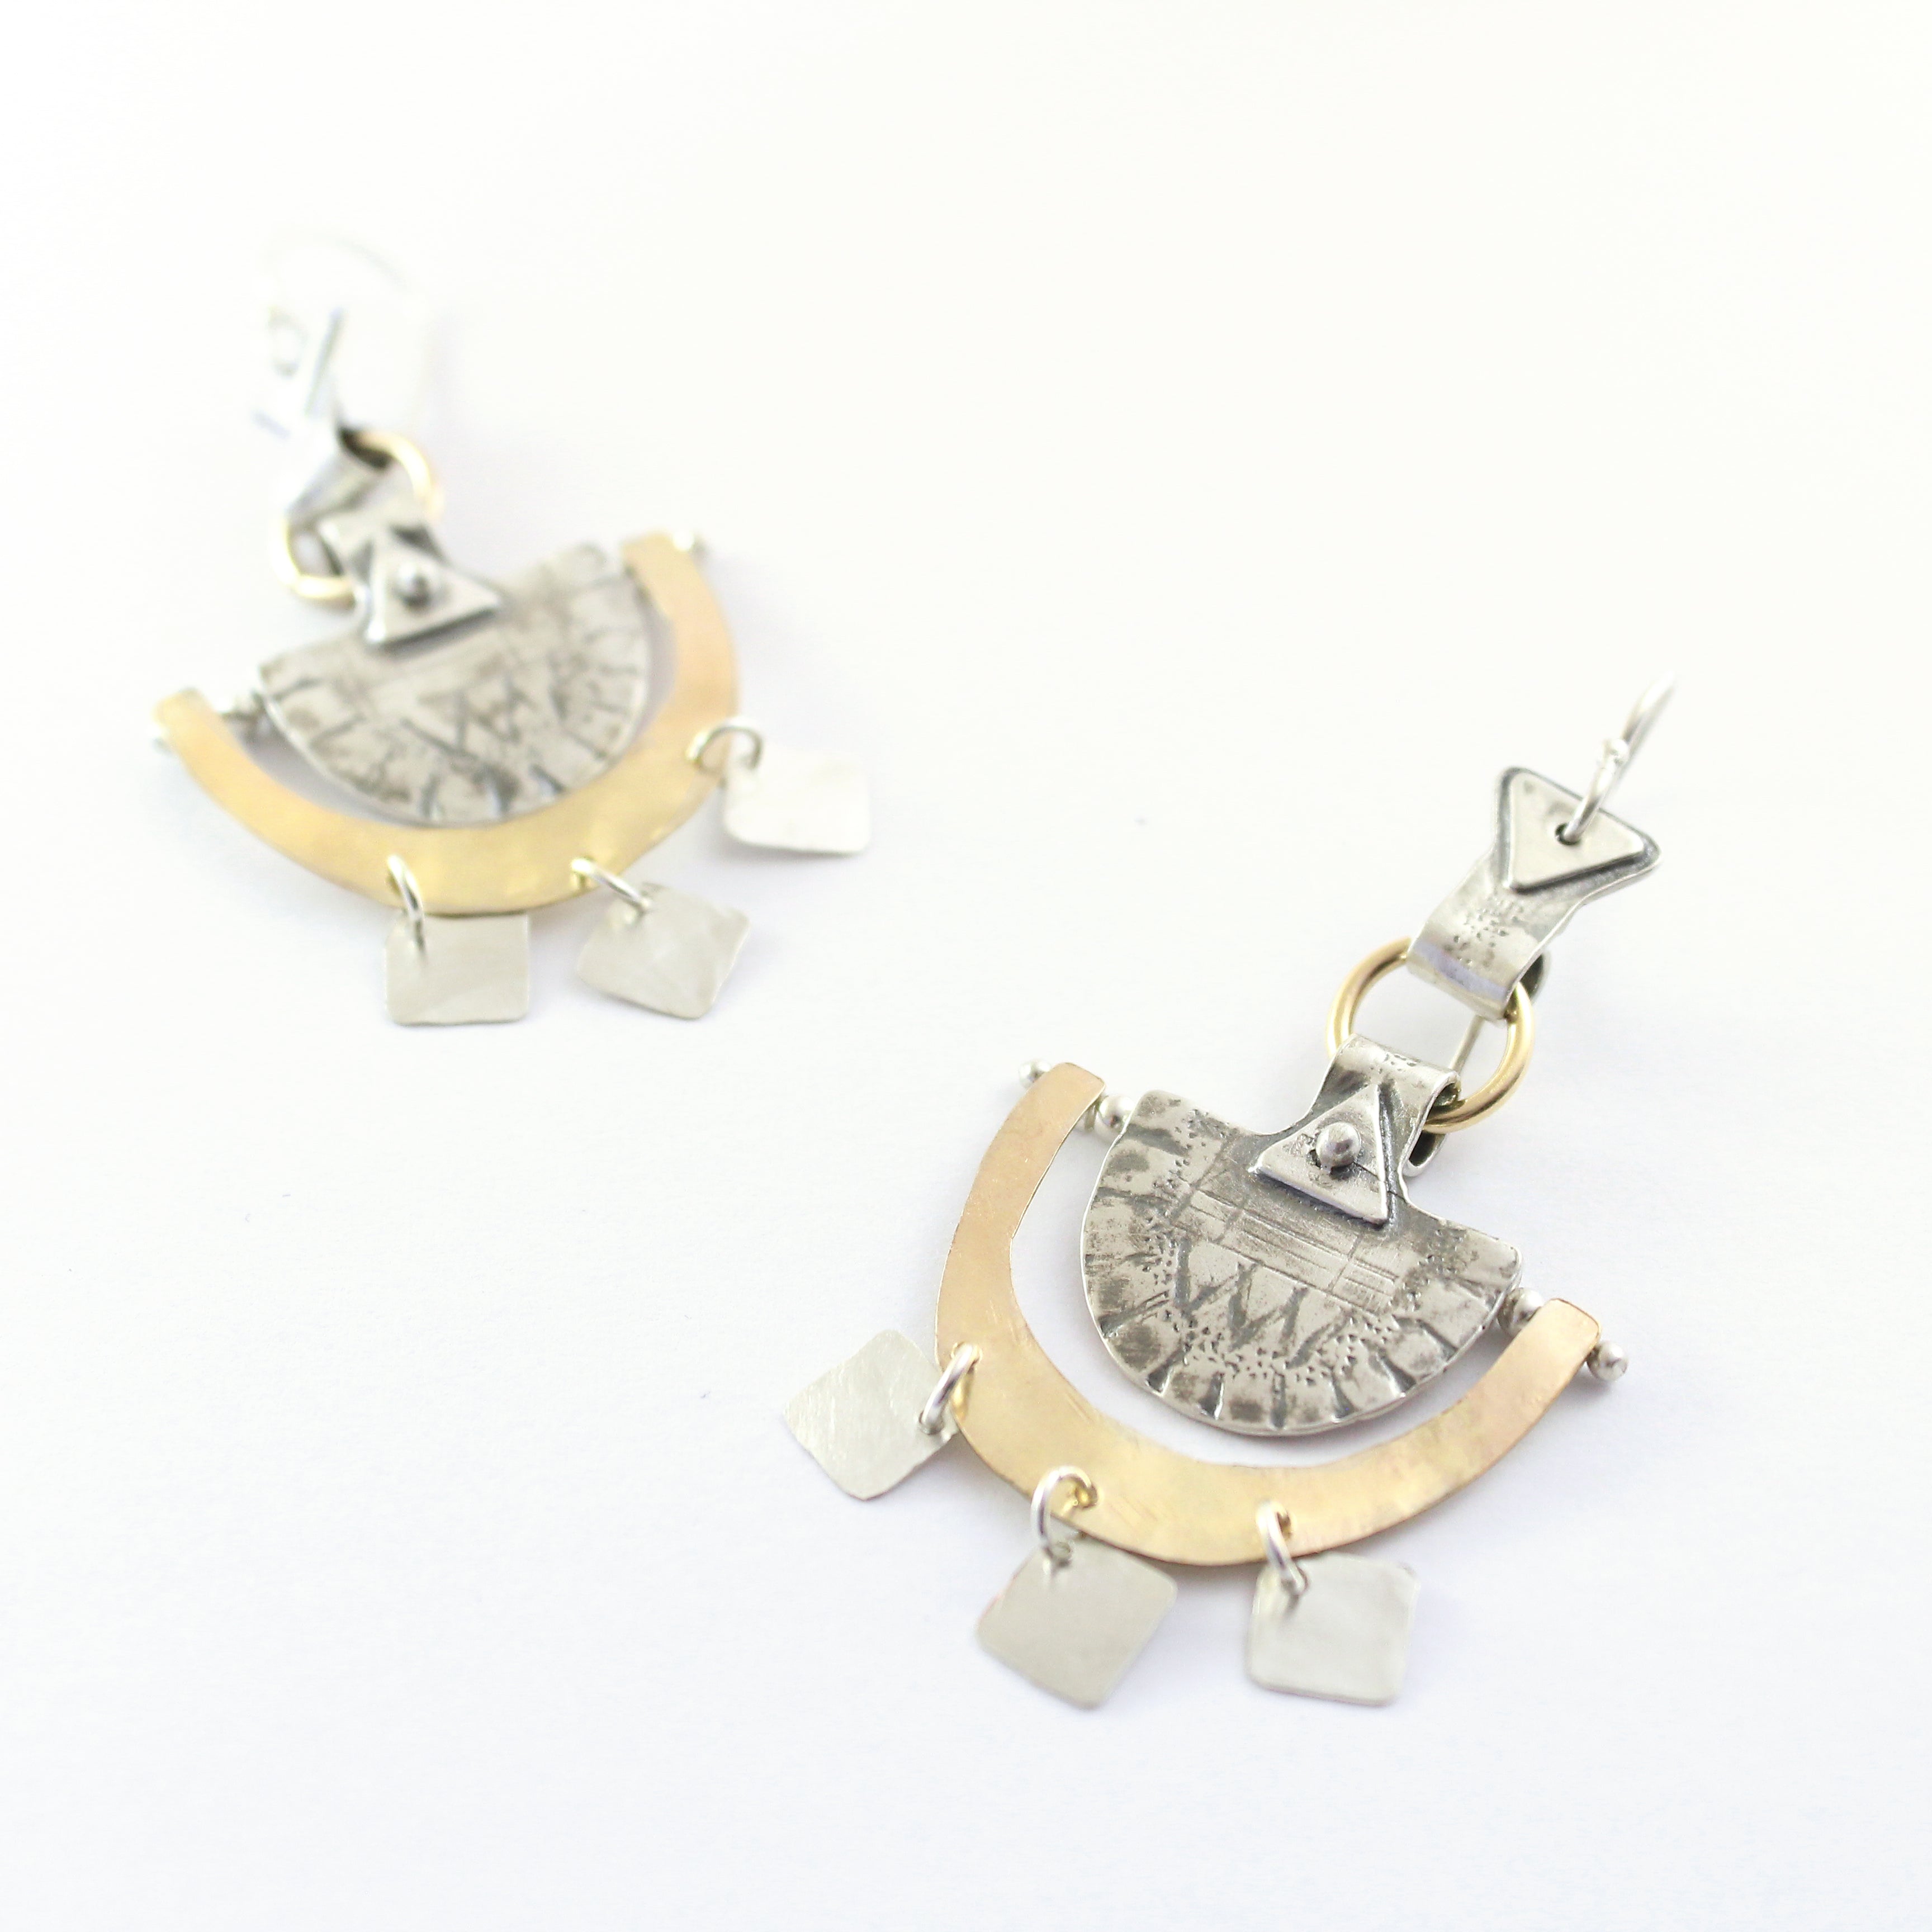 Western Moroccan Style Silver & Goldfield Large Earrings